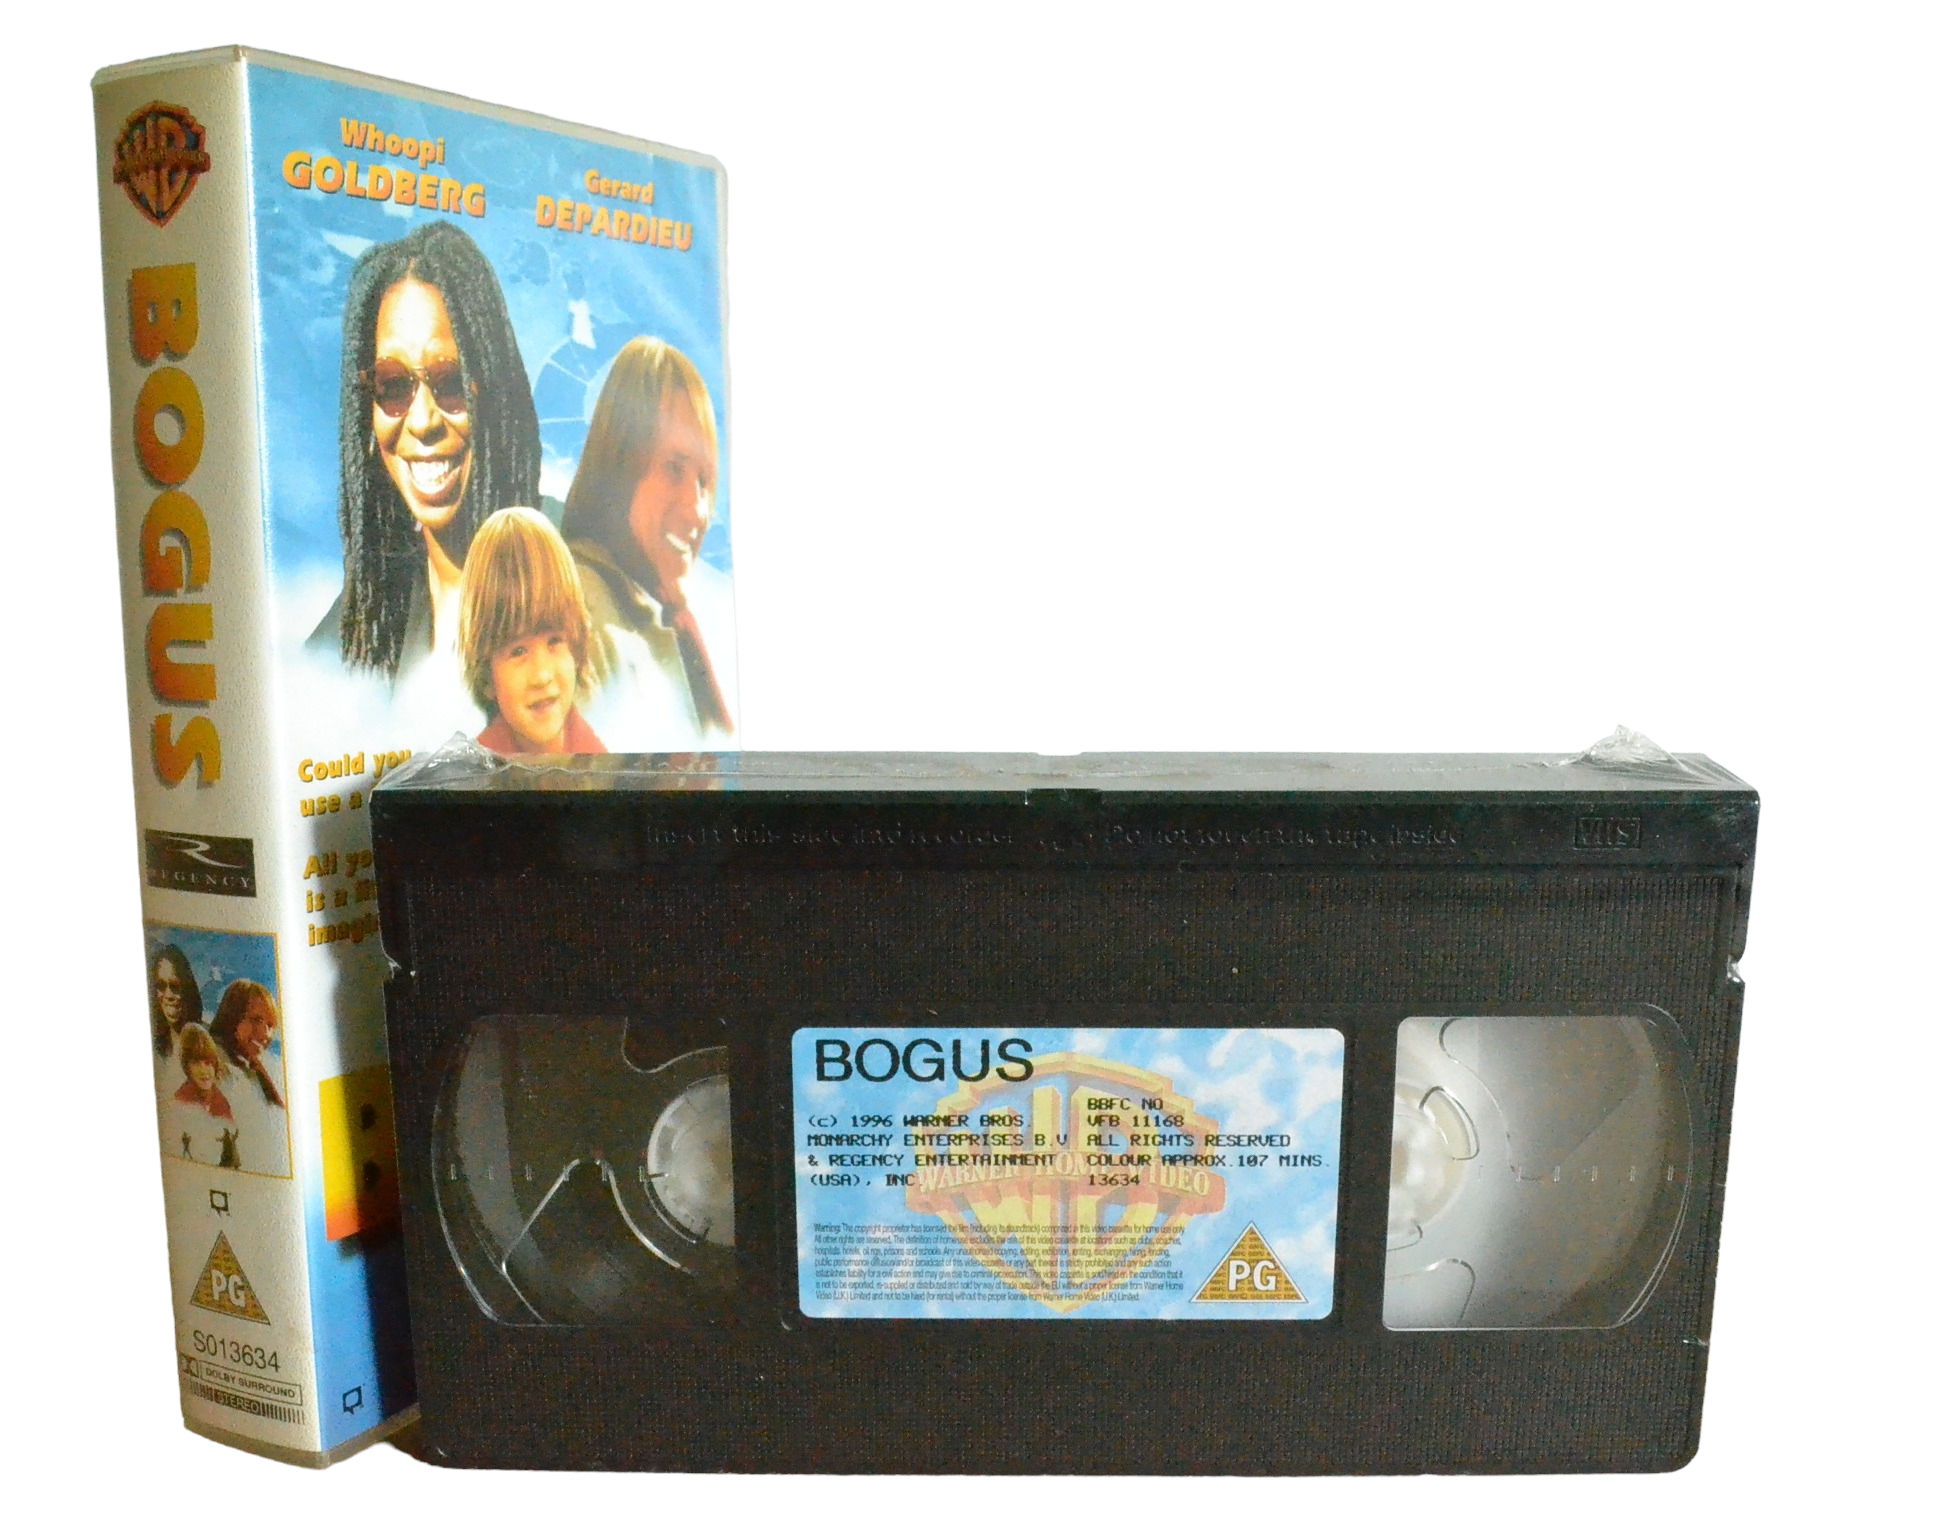 Bogus - Whoopi Goldberg - Warner Home Video - S01 3634 - Brand New Sealed - Pal - VHS-